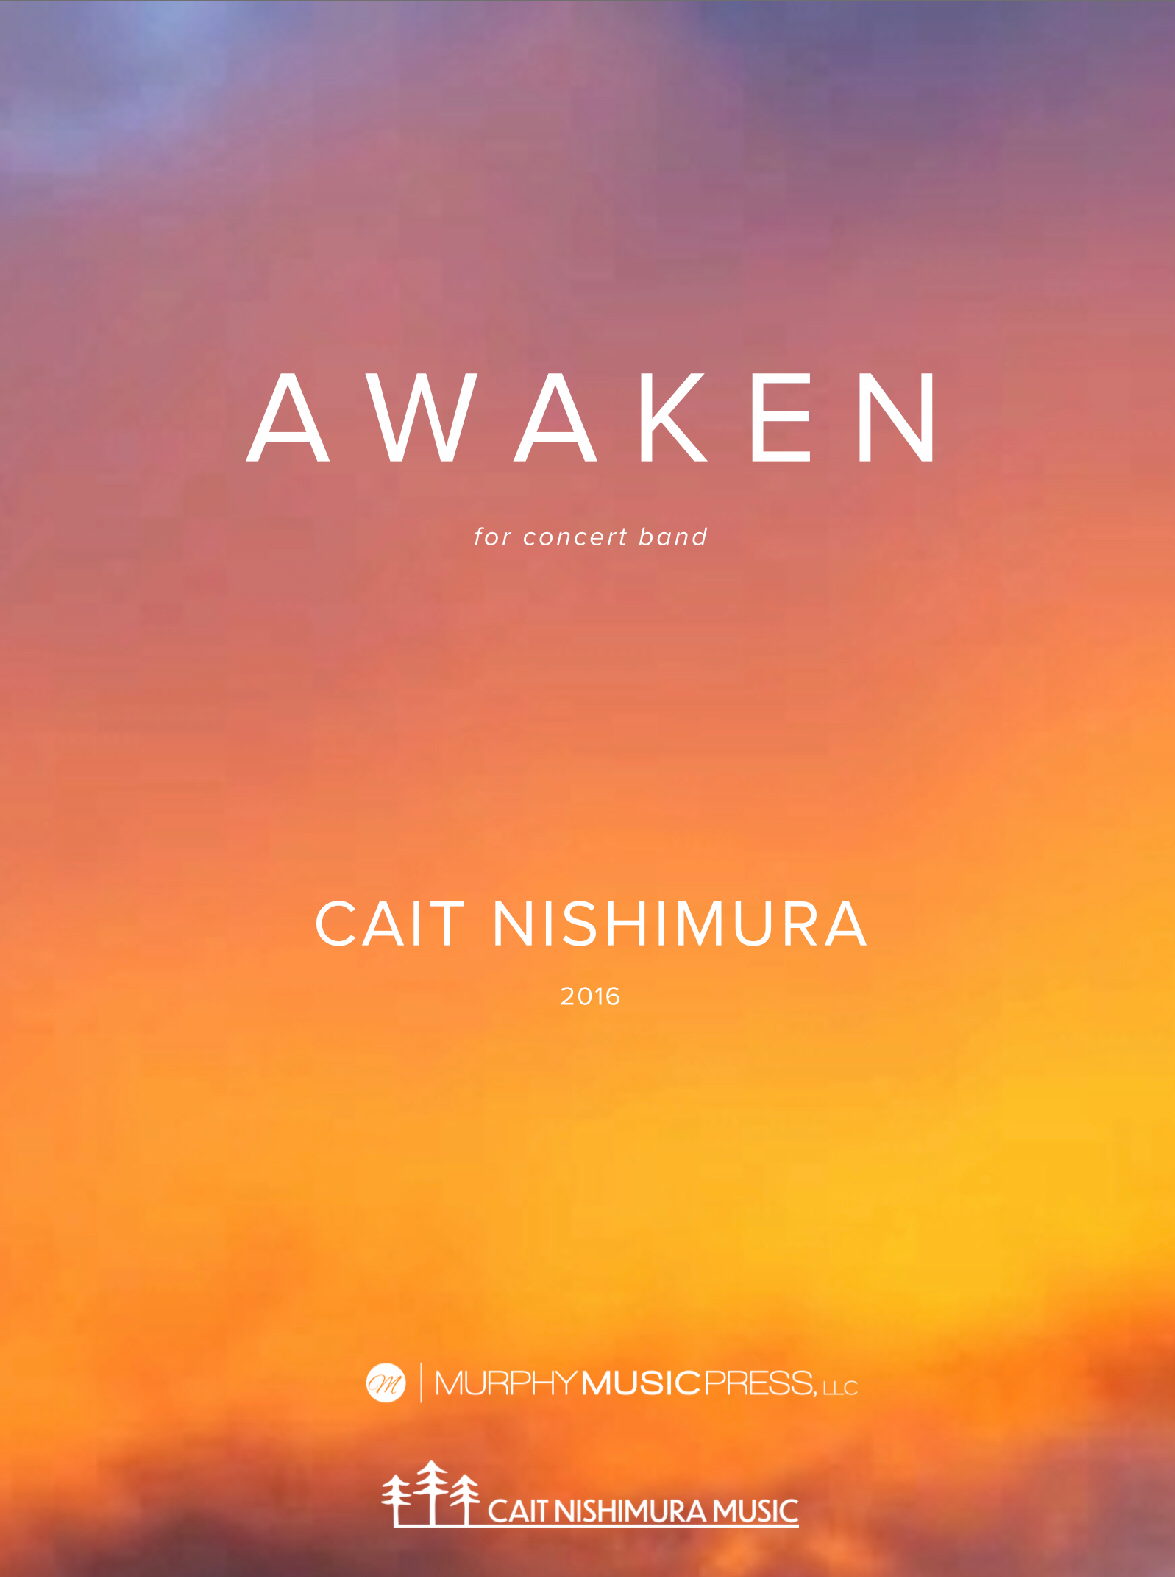 Awaken by Cait Nishimura